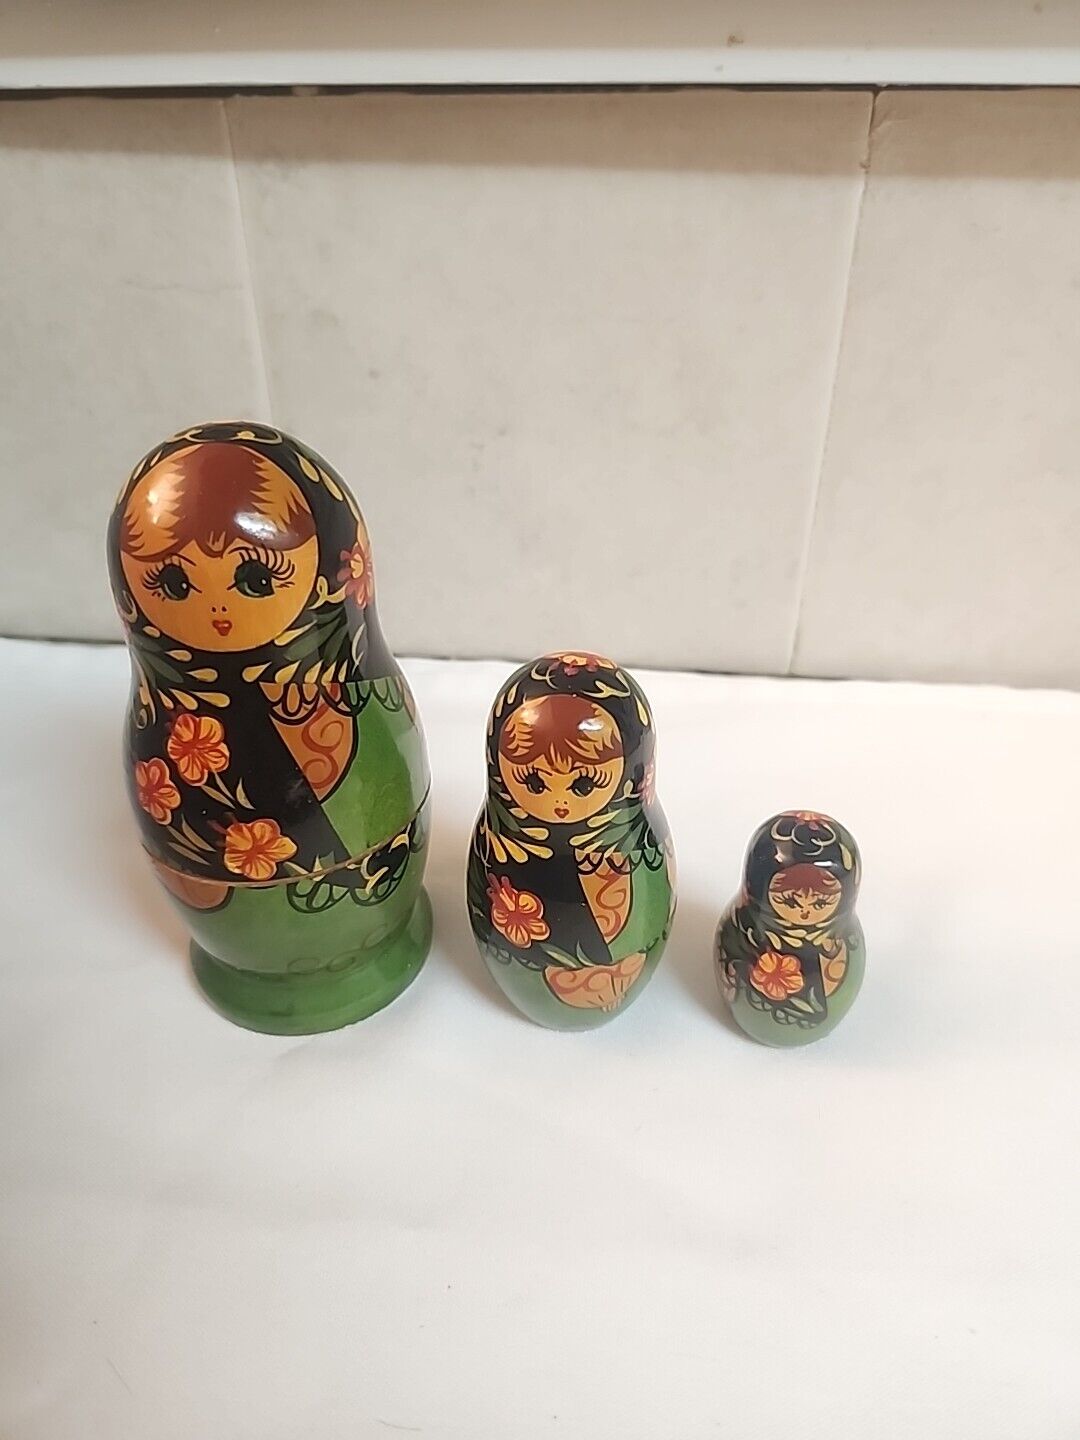 Title: Vintage New Old Stock USSR Era Russian Matryoshka Nesting Doll Set of 3